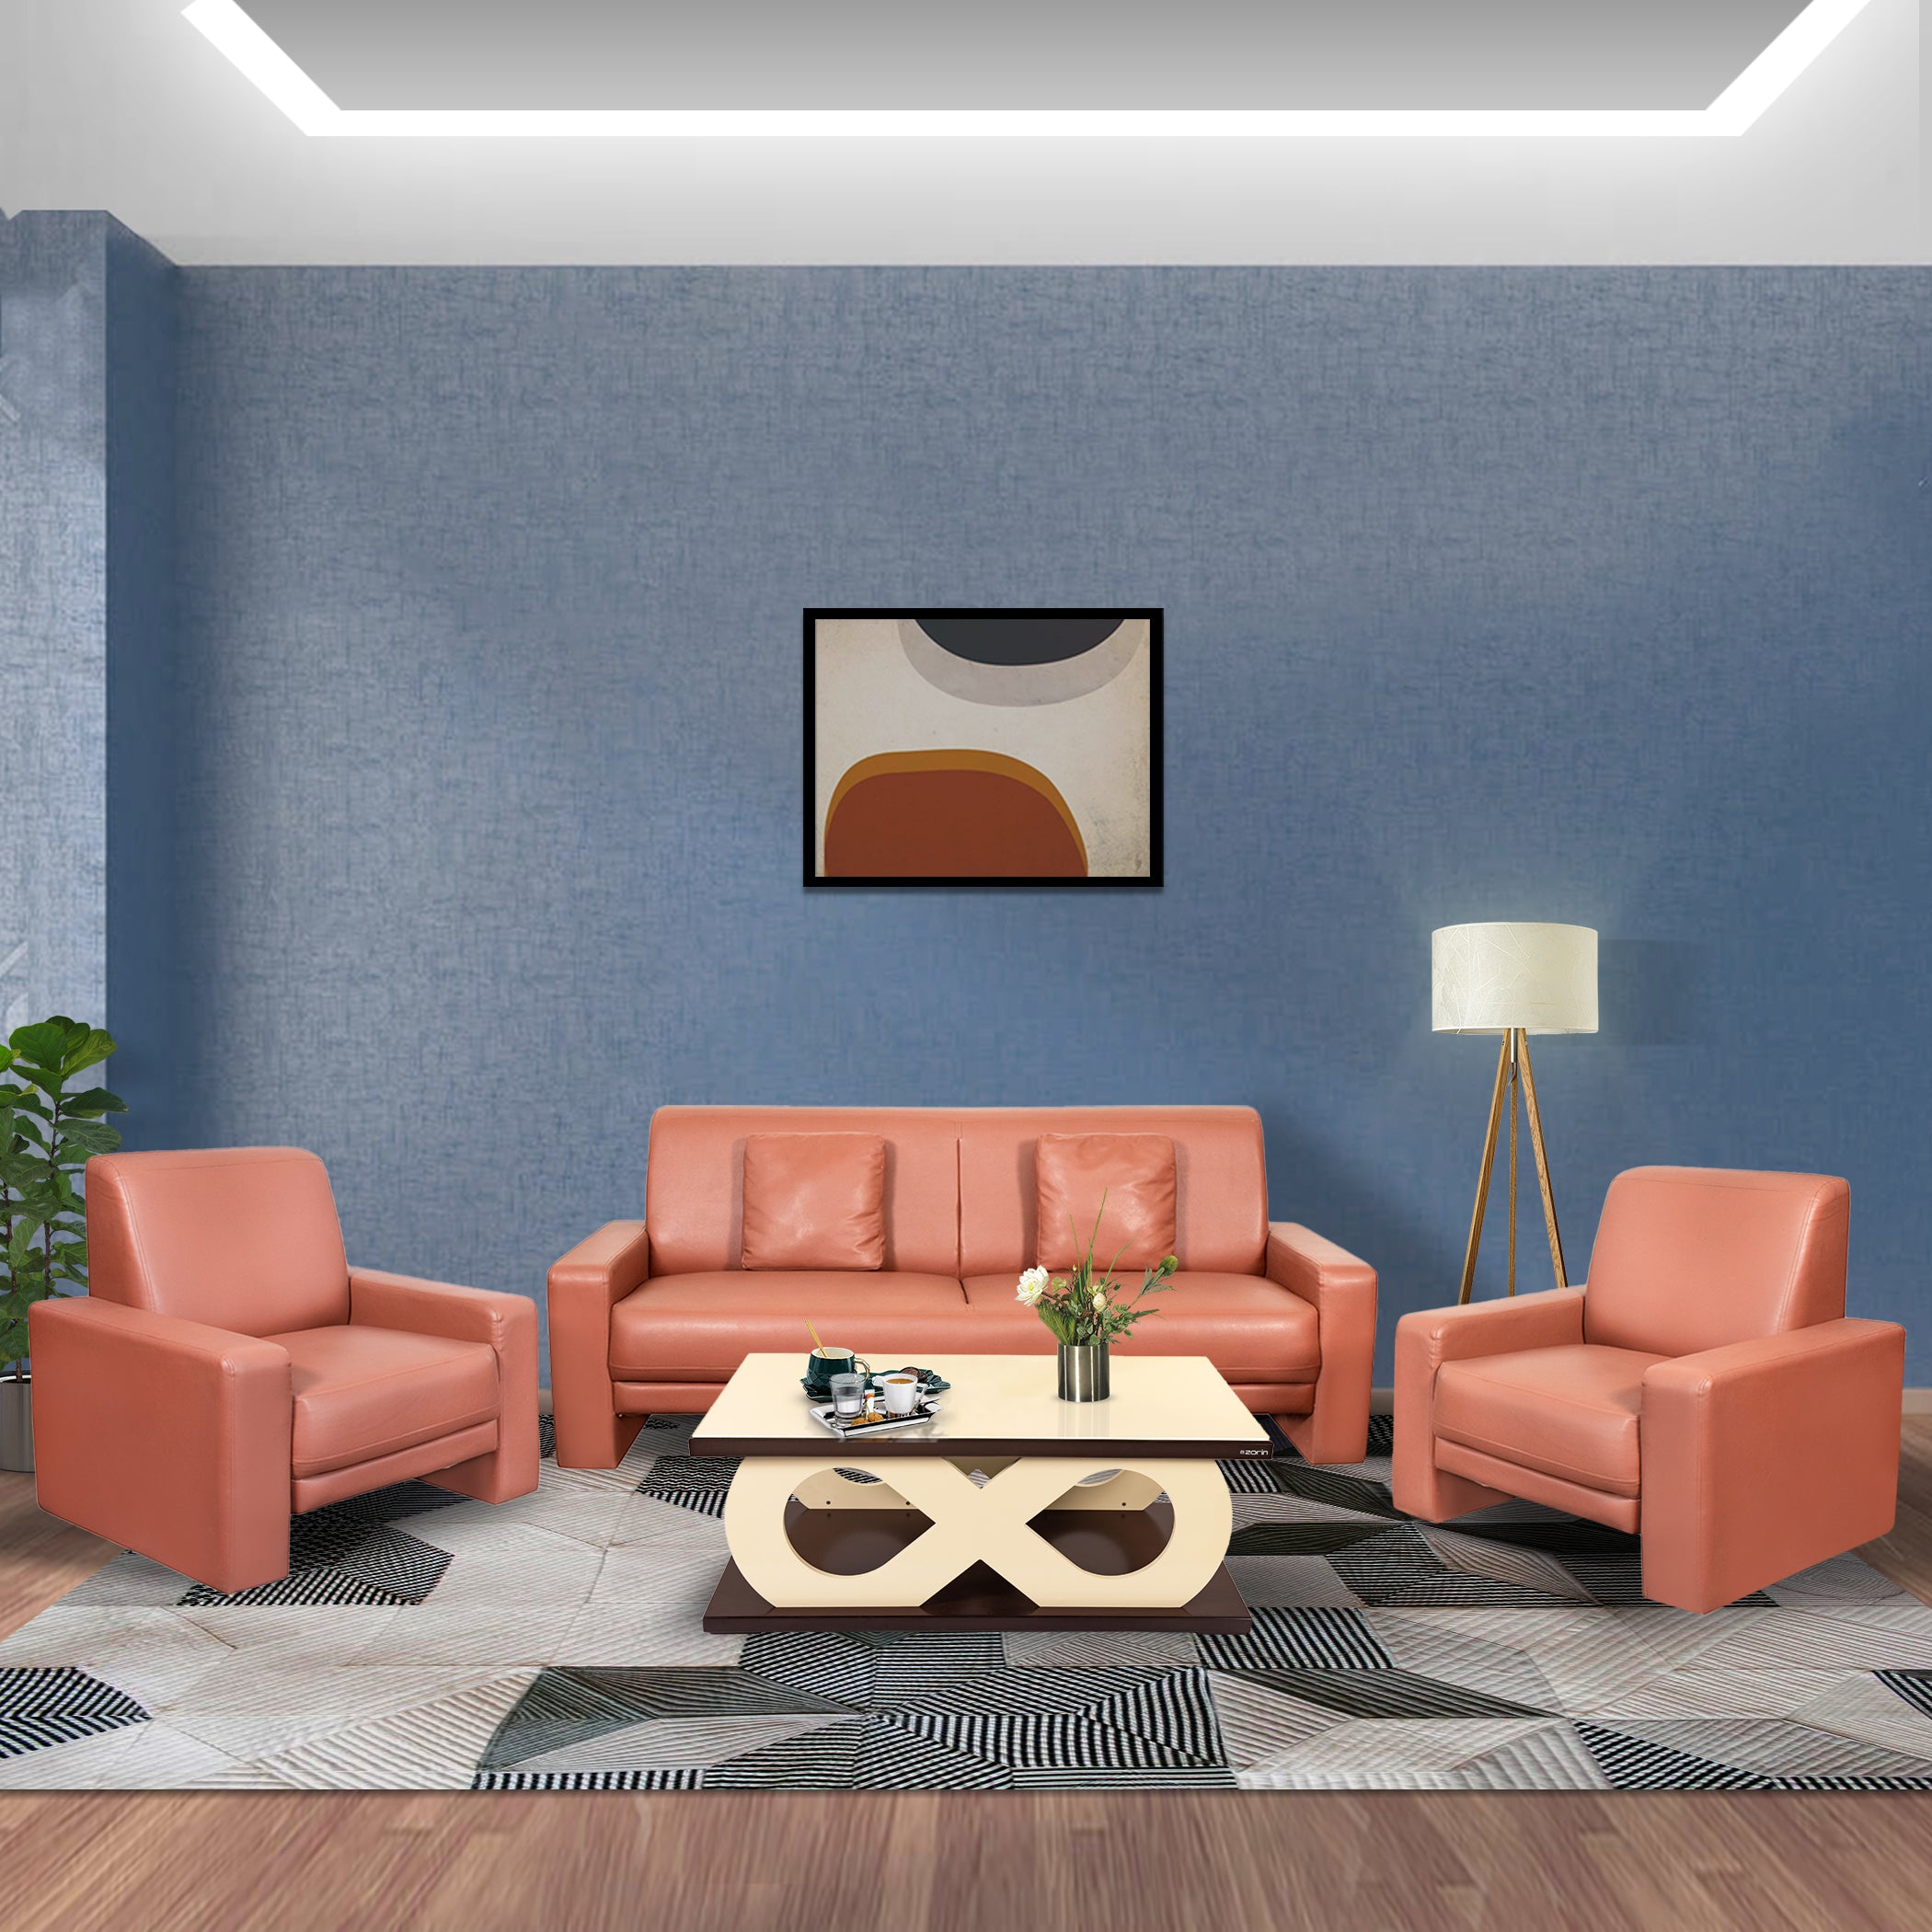 Ace Tan 3S Sofa by Zorin Zorin